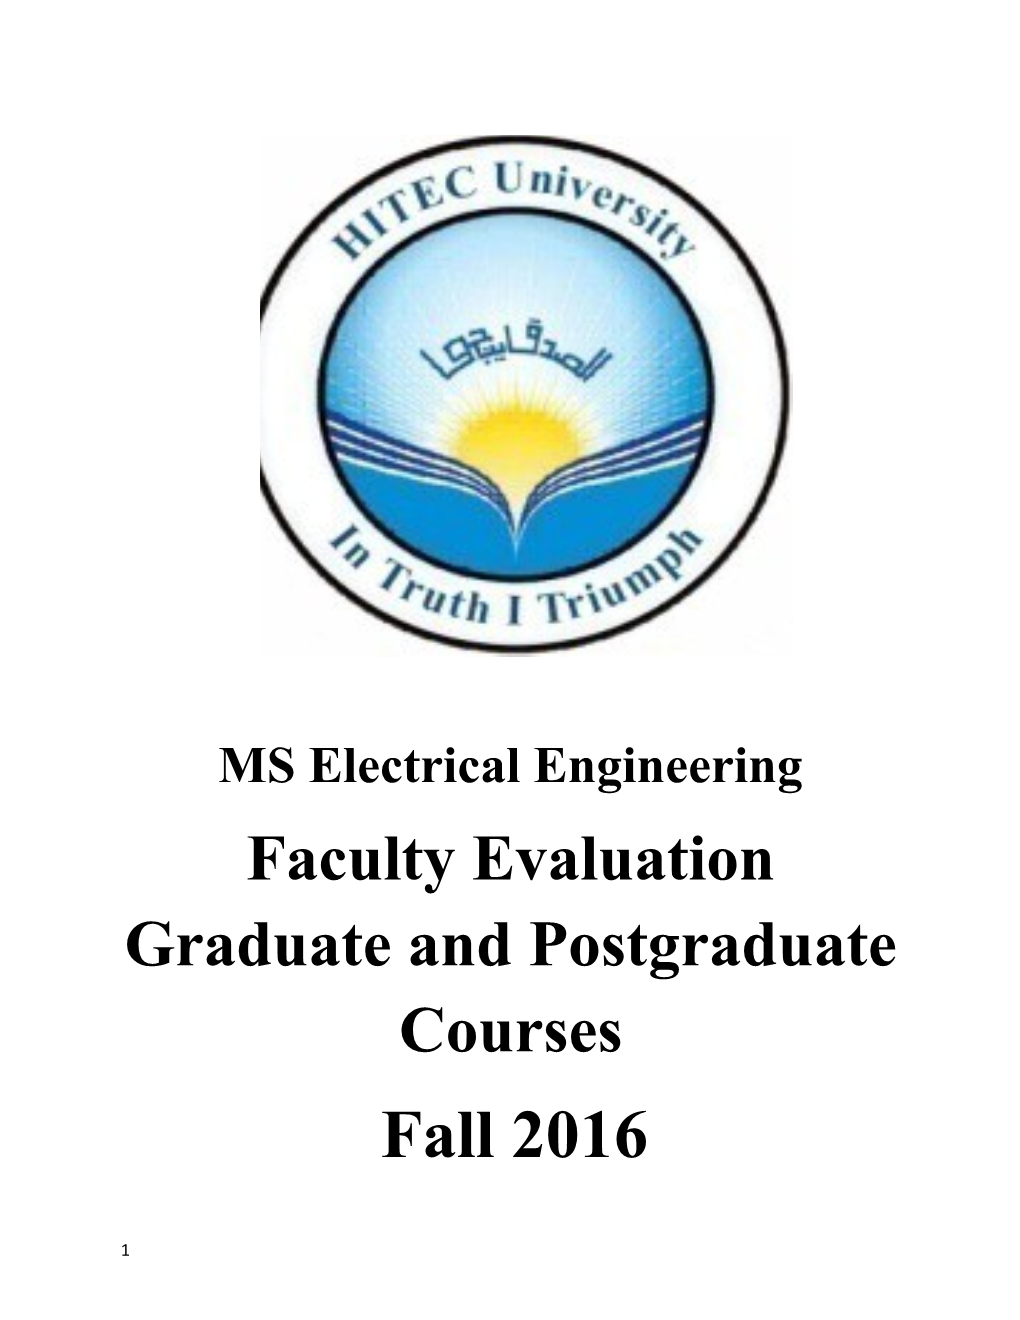 Faculty Evaluation Graduate and Postgraduate Courses